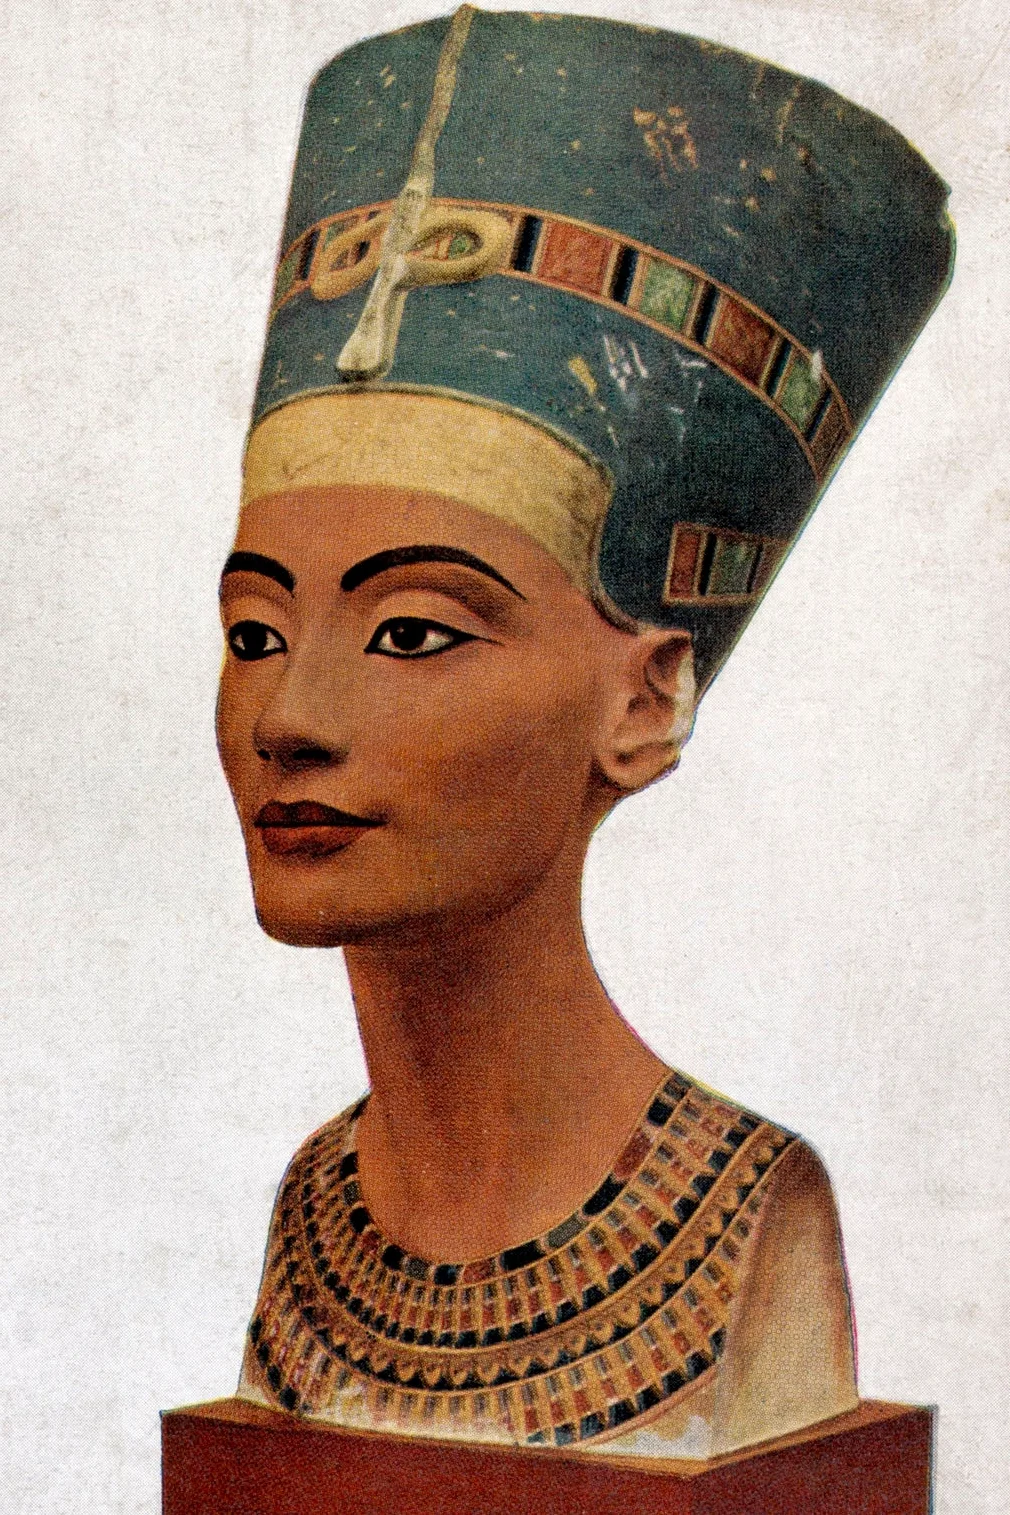 Портрет царицы Нефертити